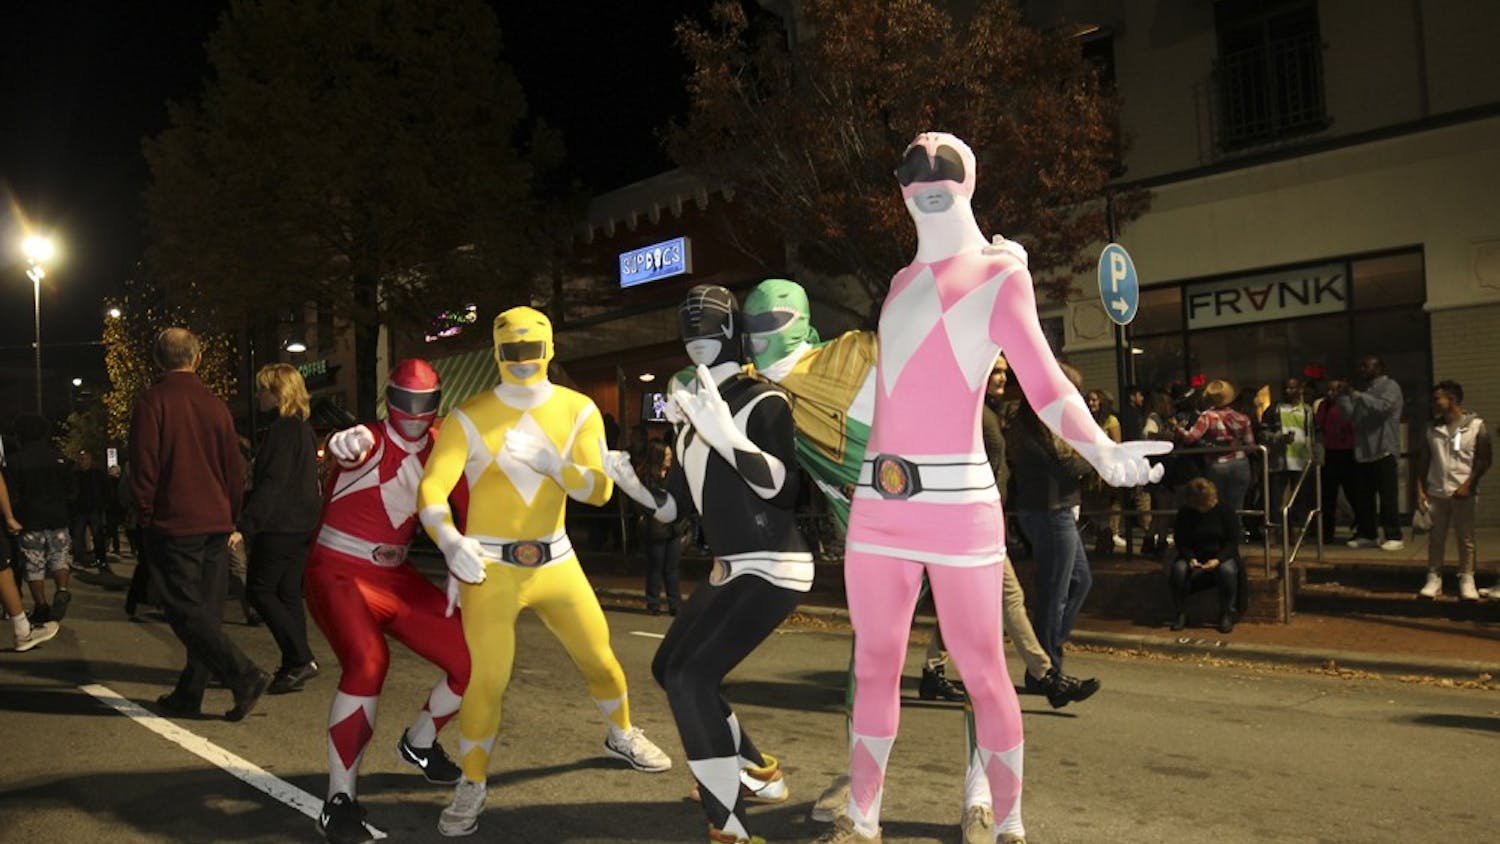 Halloween festivities on Franklin Street: The Power Rangers made an appearance on Franklin Street Saturday night